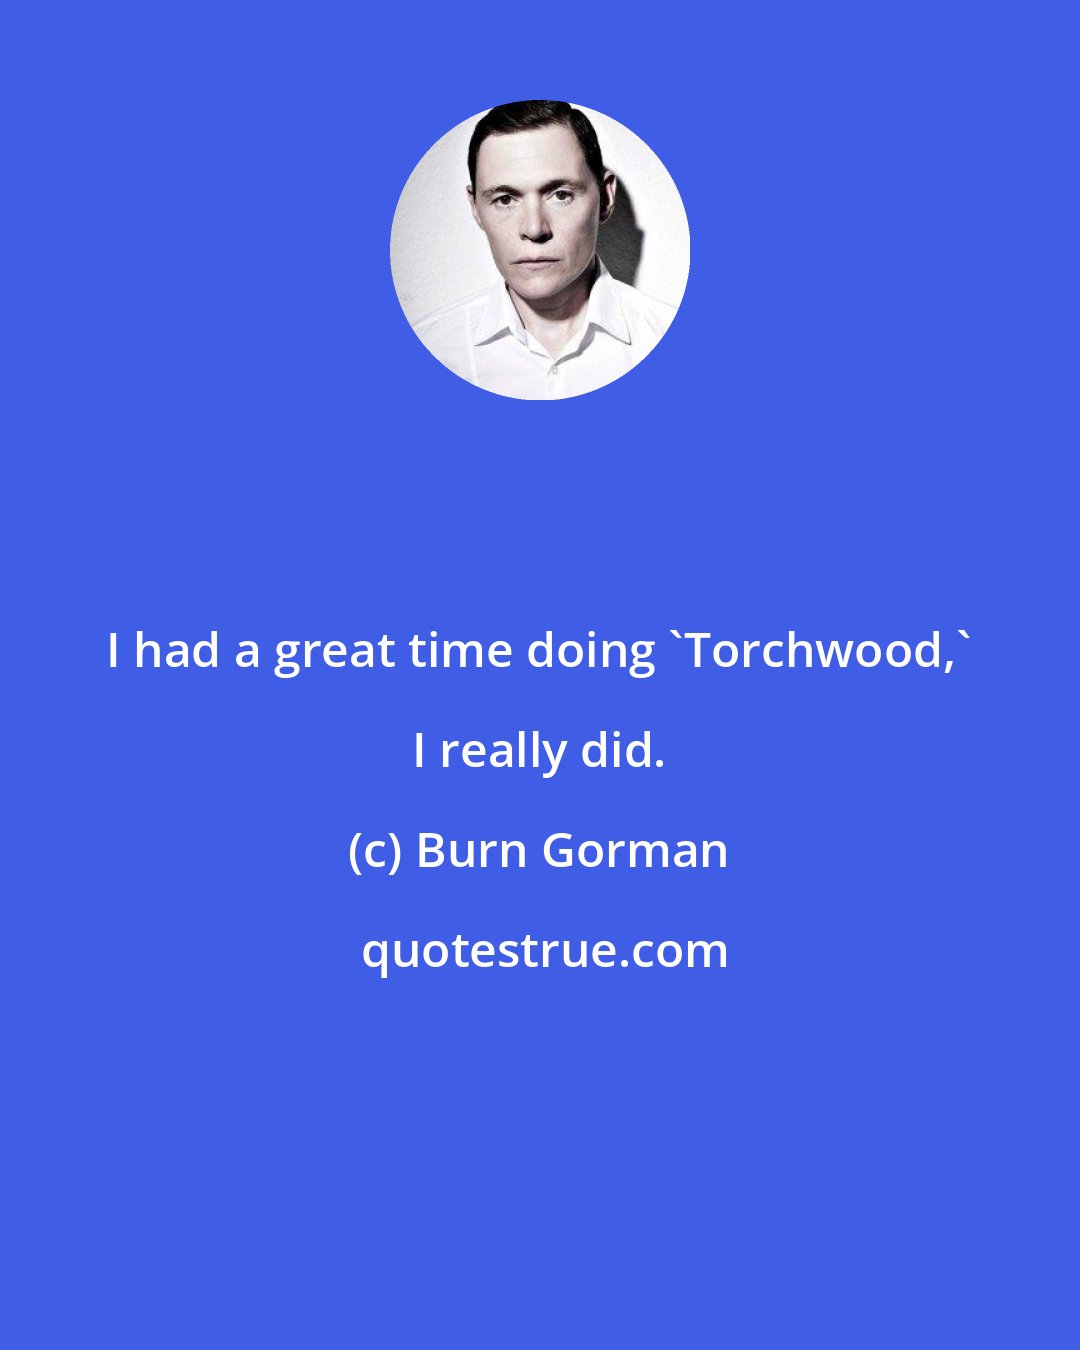 Burn Gorman: I had a great time doing 'Torchwood,' I really did.